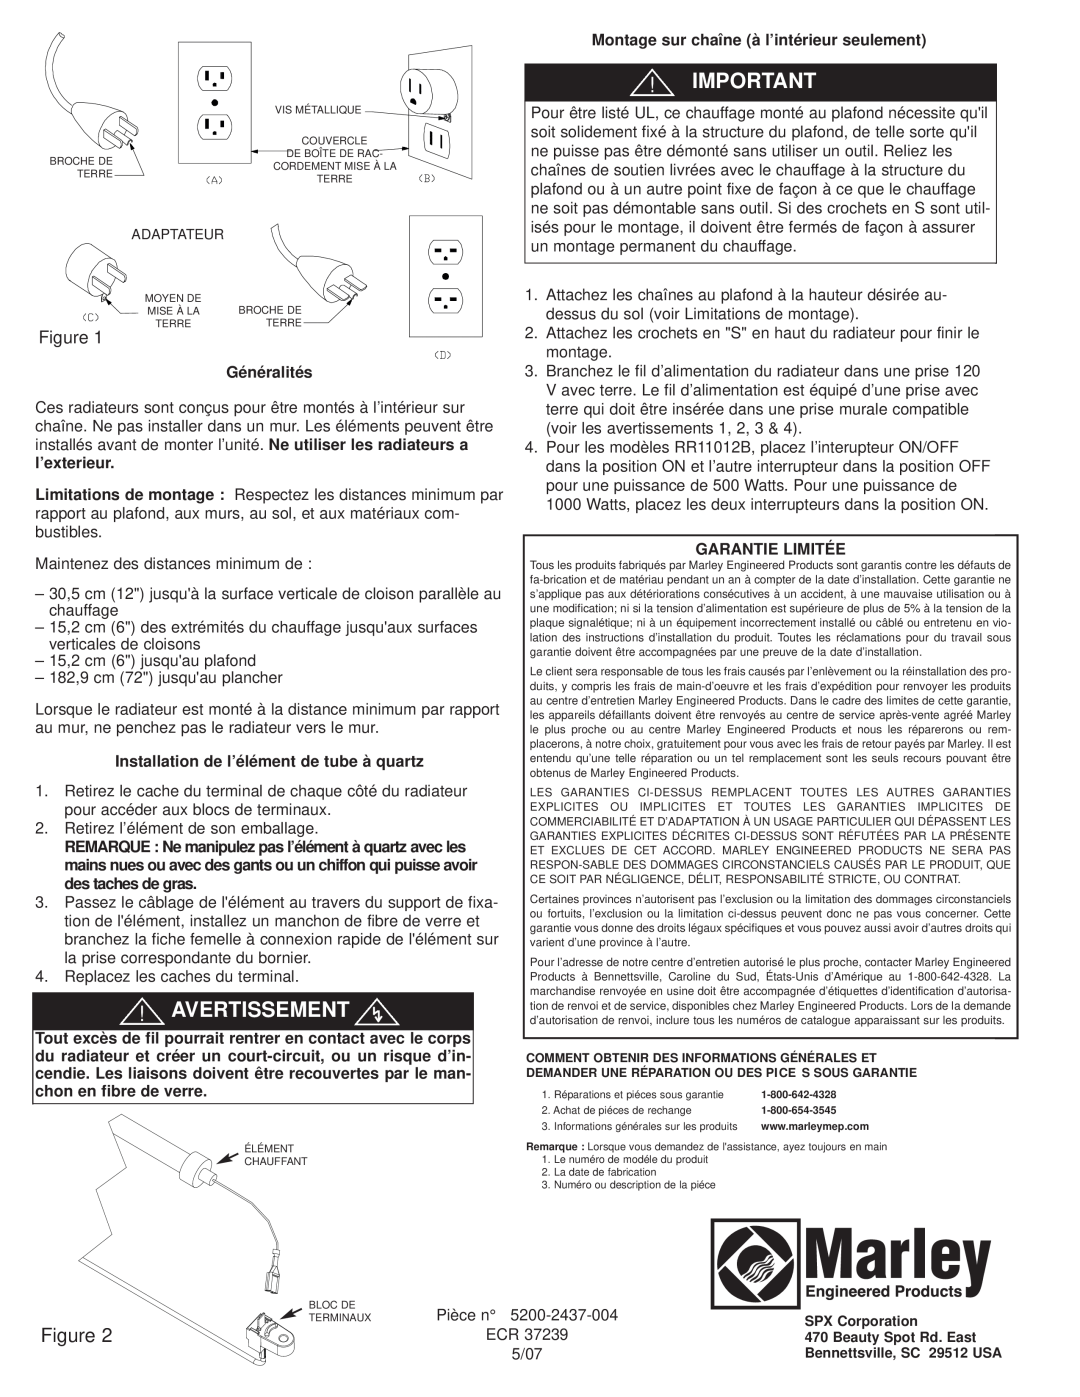 Marley Engineered Products FRR10512B instruction sheet A Ve Rtissemen, Im Portant, F igu re2 